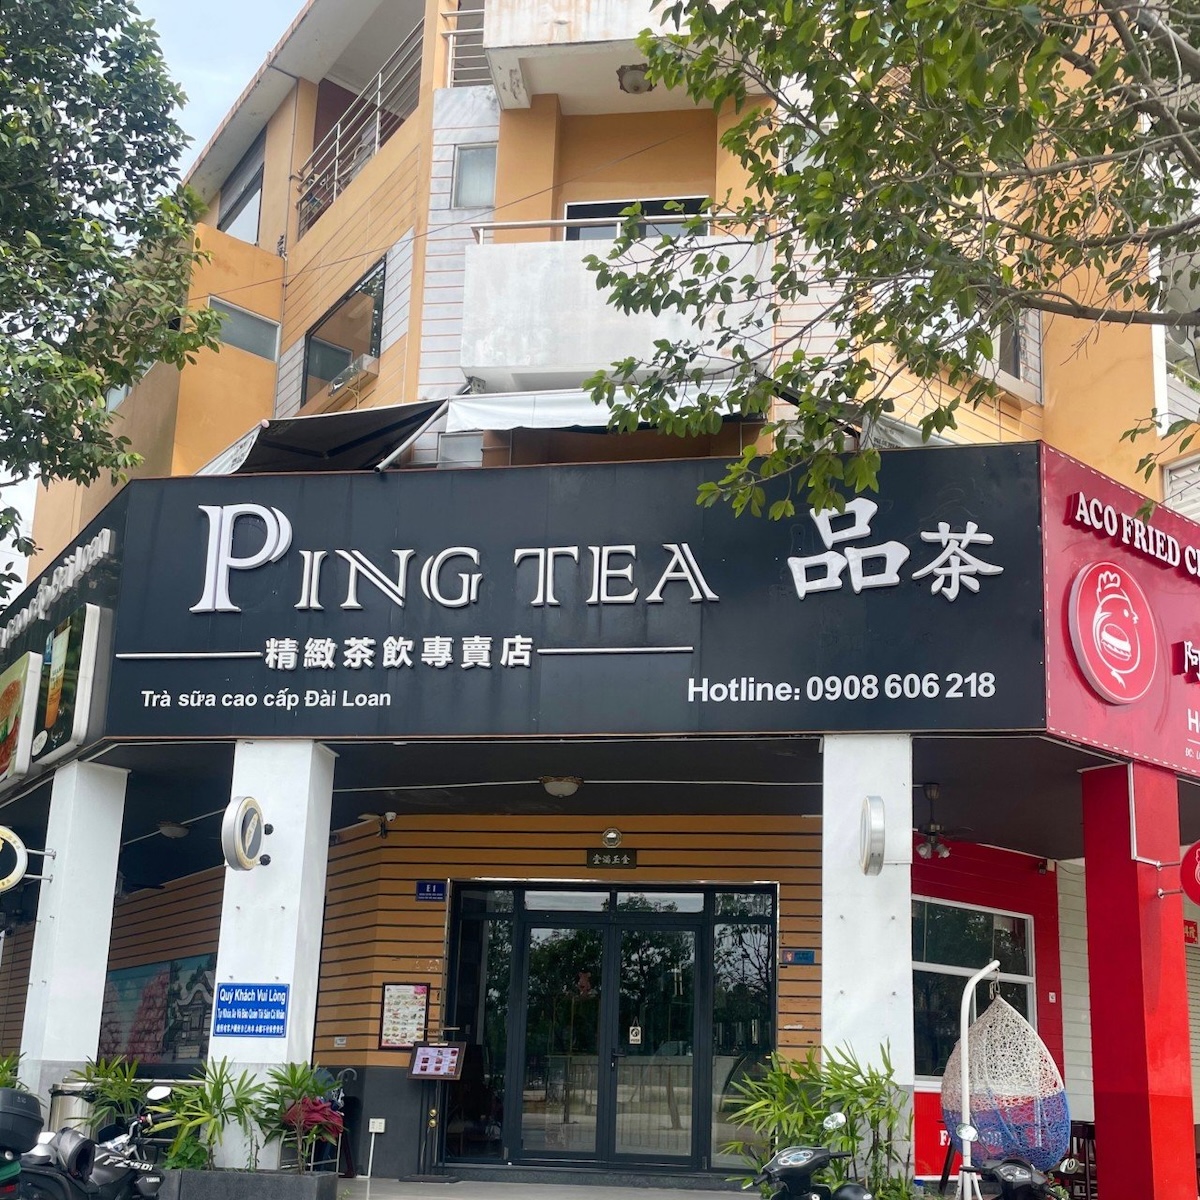 Ping Tea's image 13